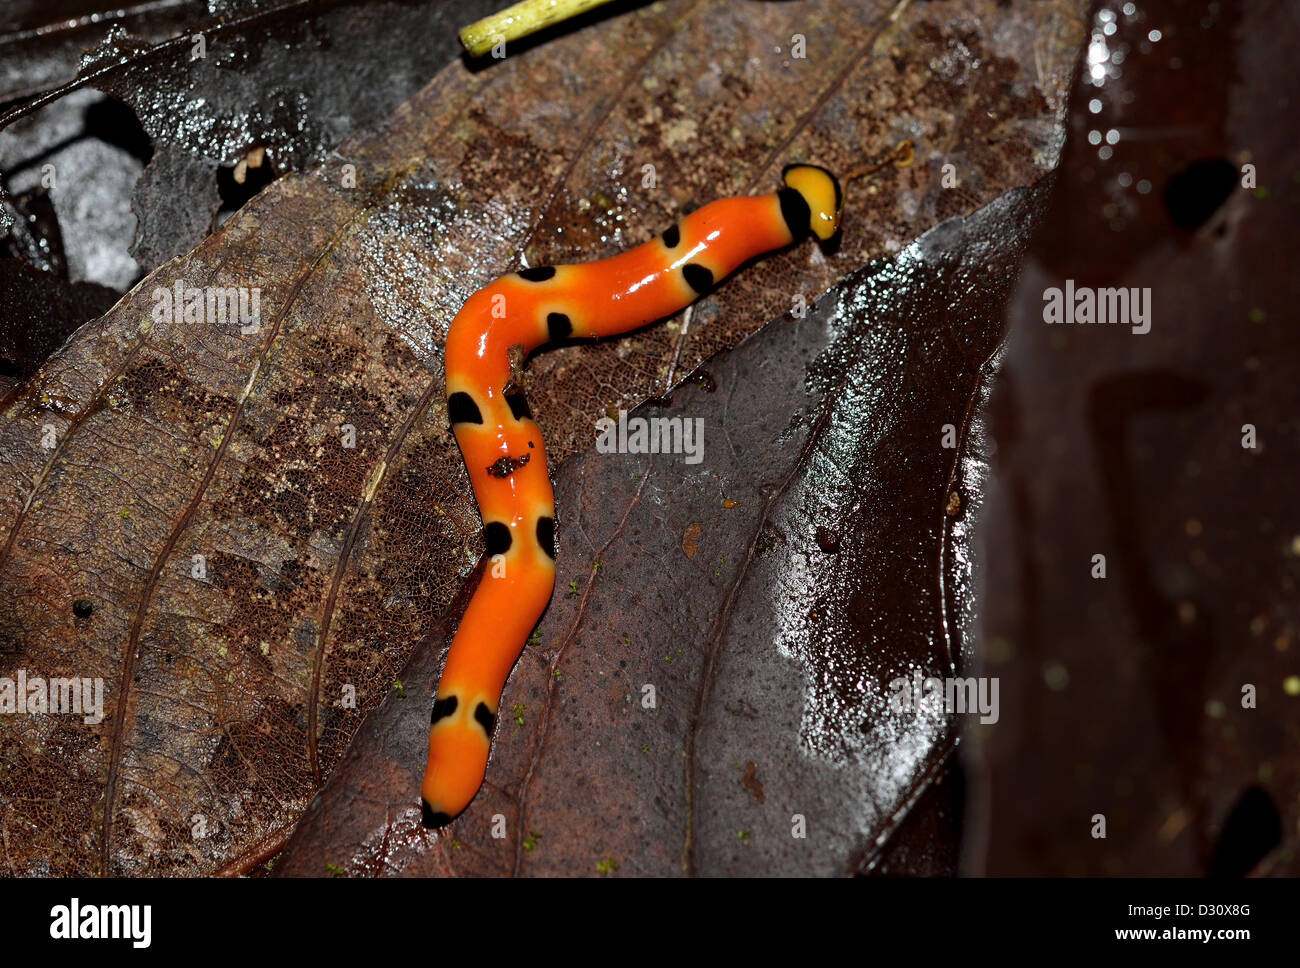 A colorful flat worm (Bipalium sp.) on a decayed leaf. Sarawak, Borneo, Malaysia. Stock Photo